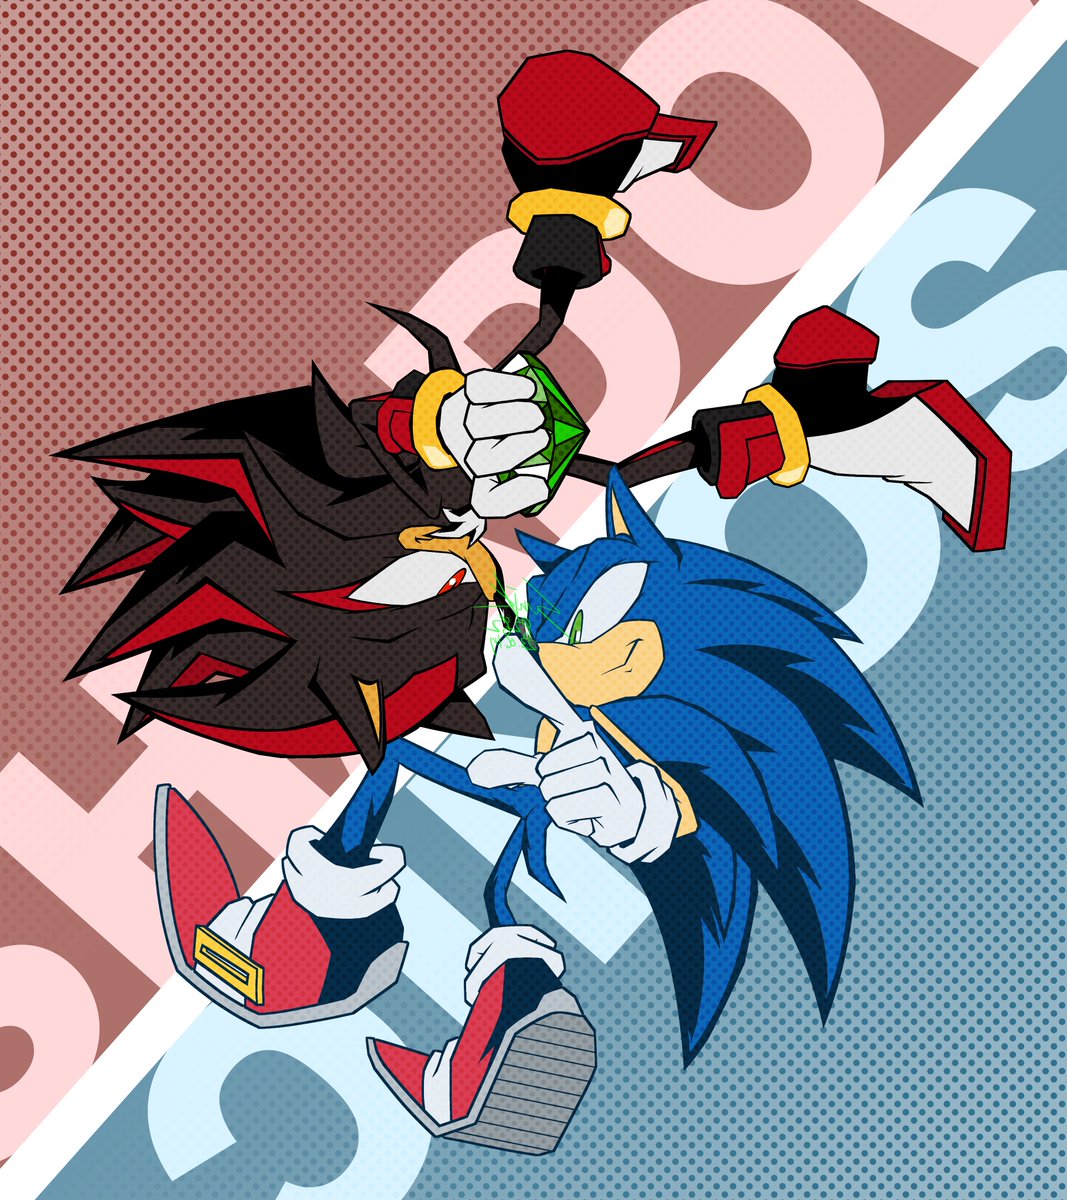 Sonic
Shadow

#SonicTheHedgehog 
#ShadowTheHedgehog 
#sonic